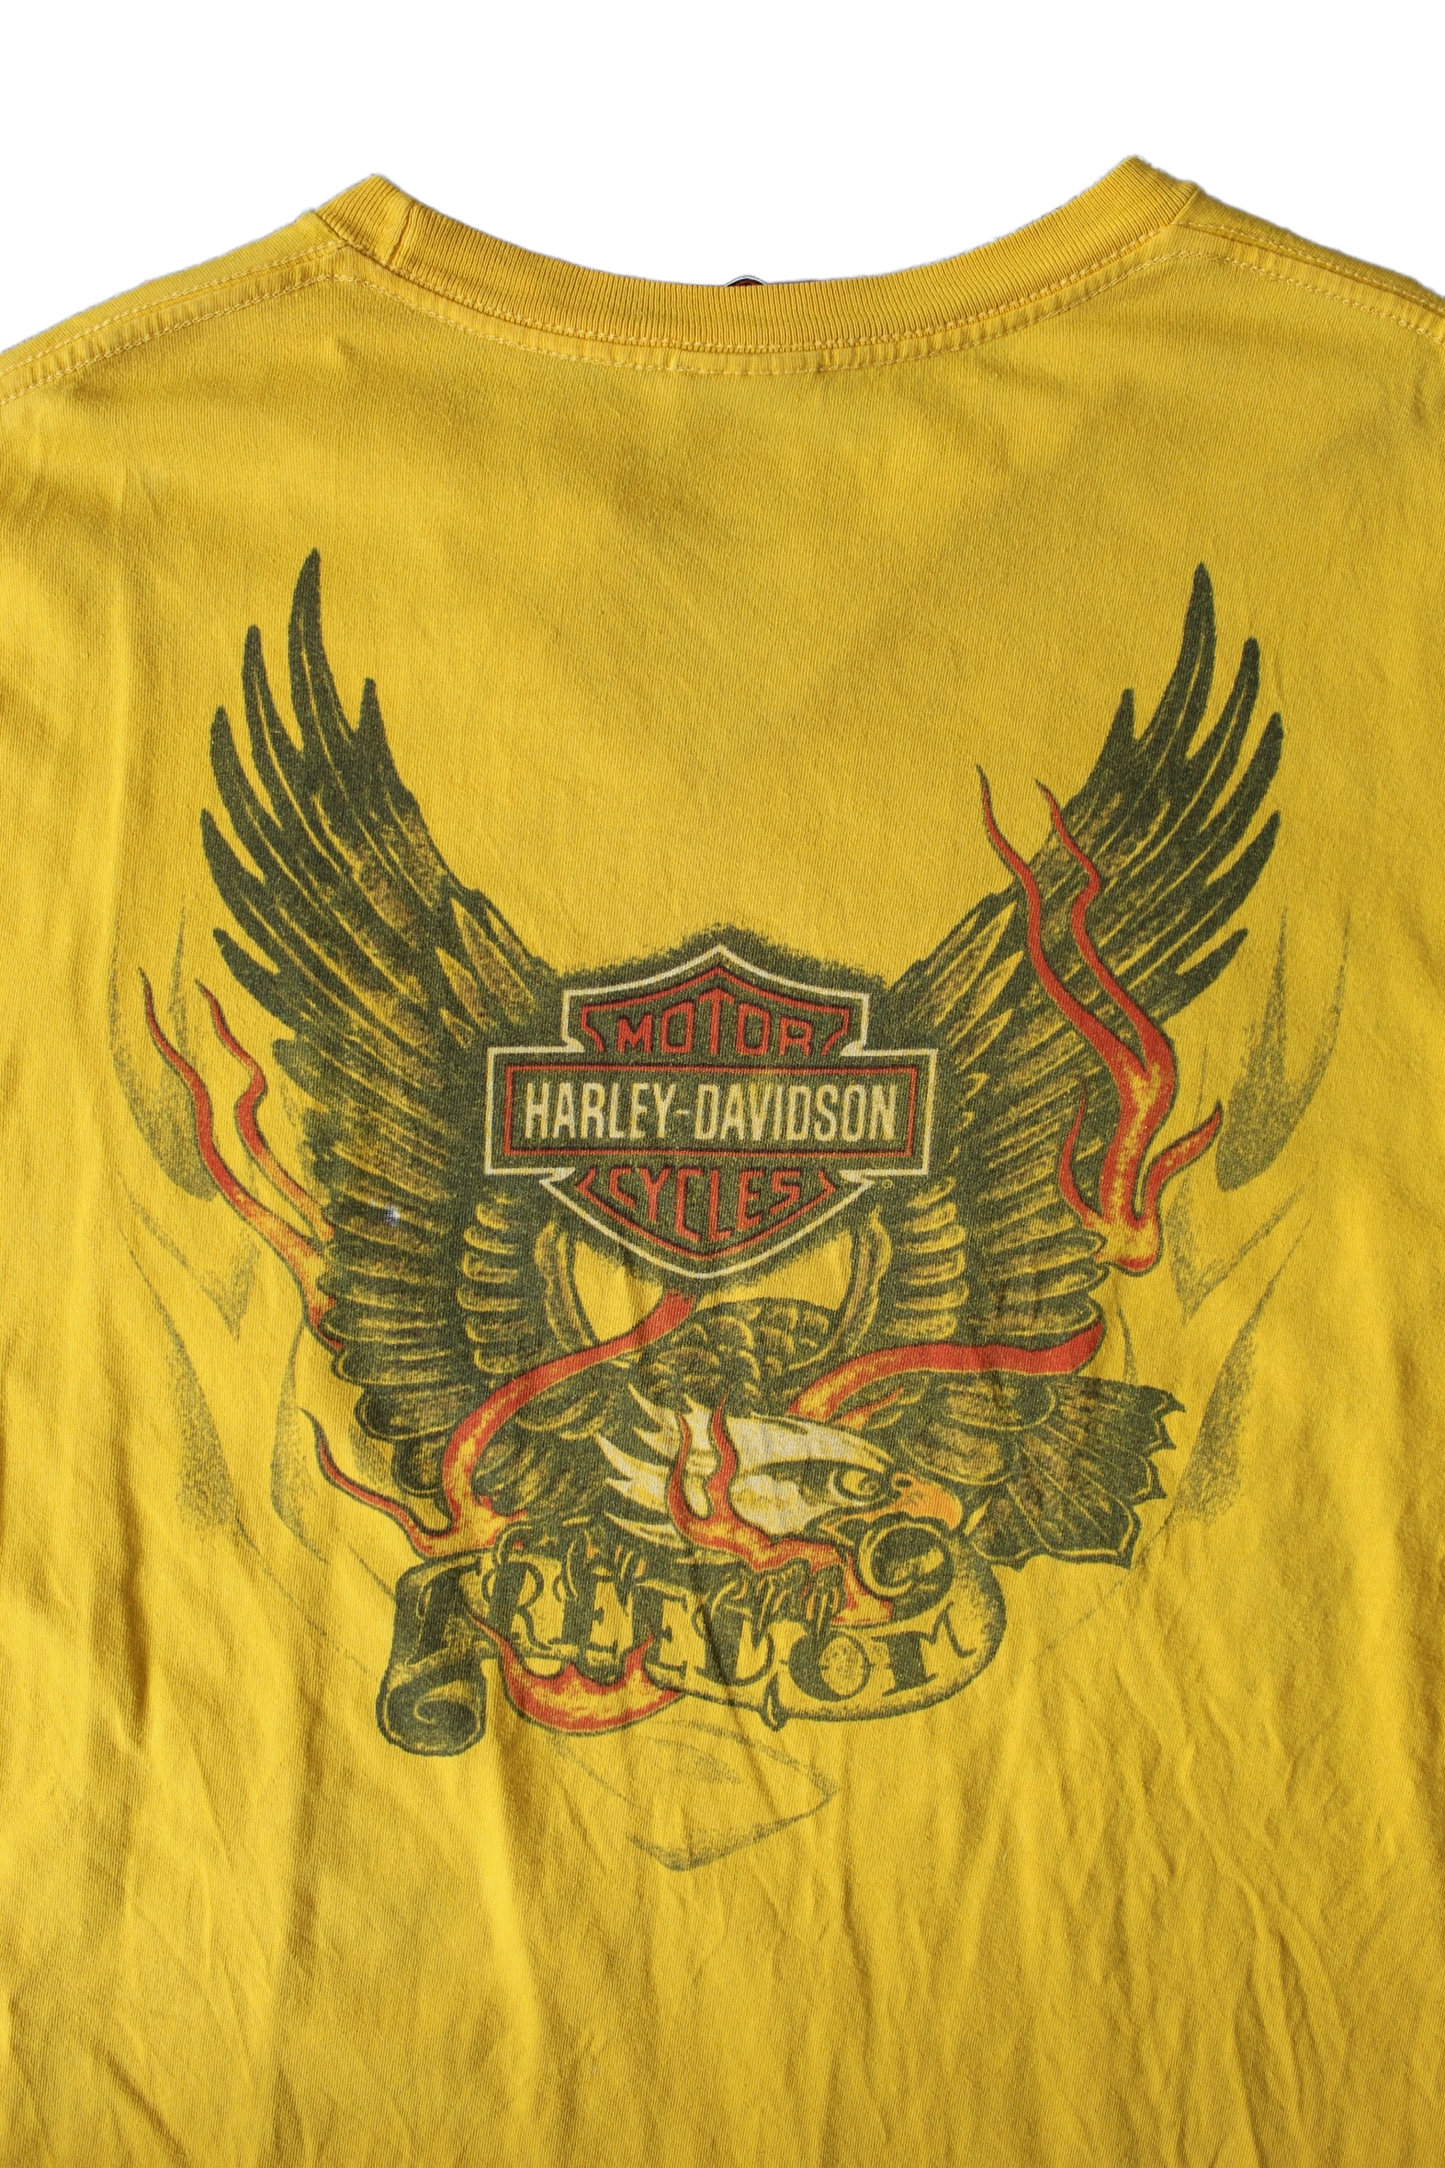 Harley Davidson - Columbia, SC - Tee